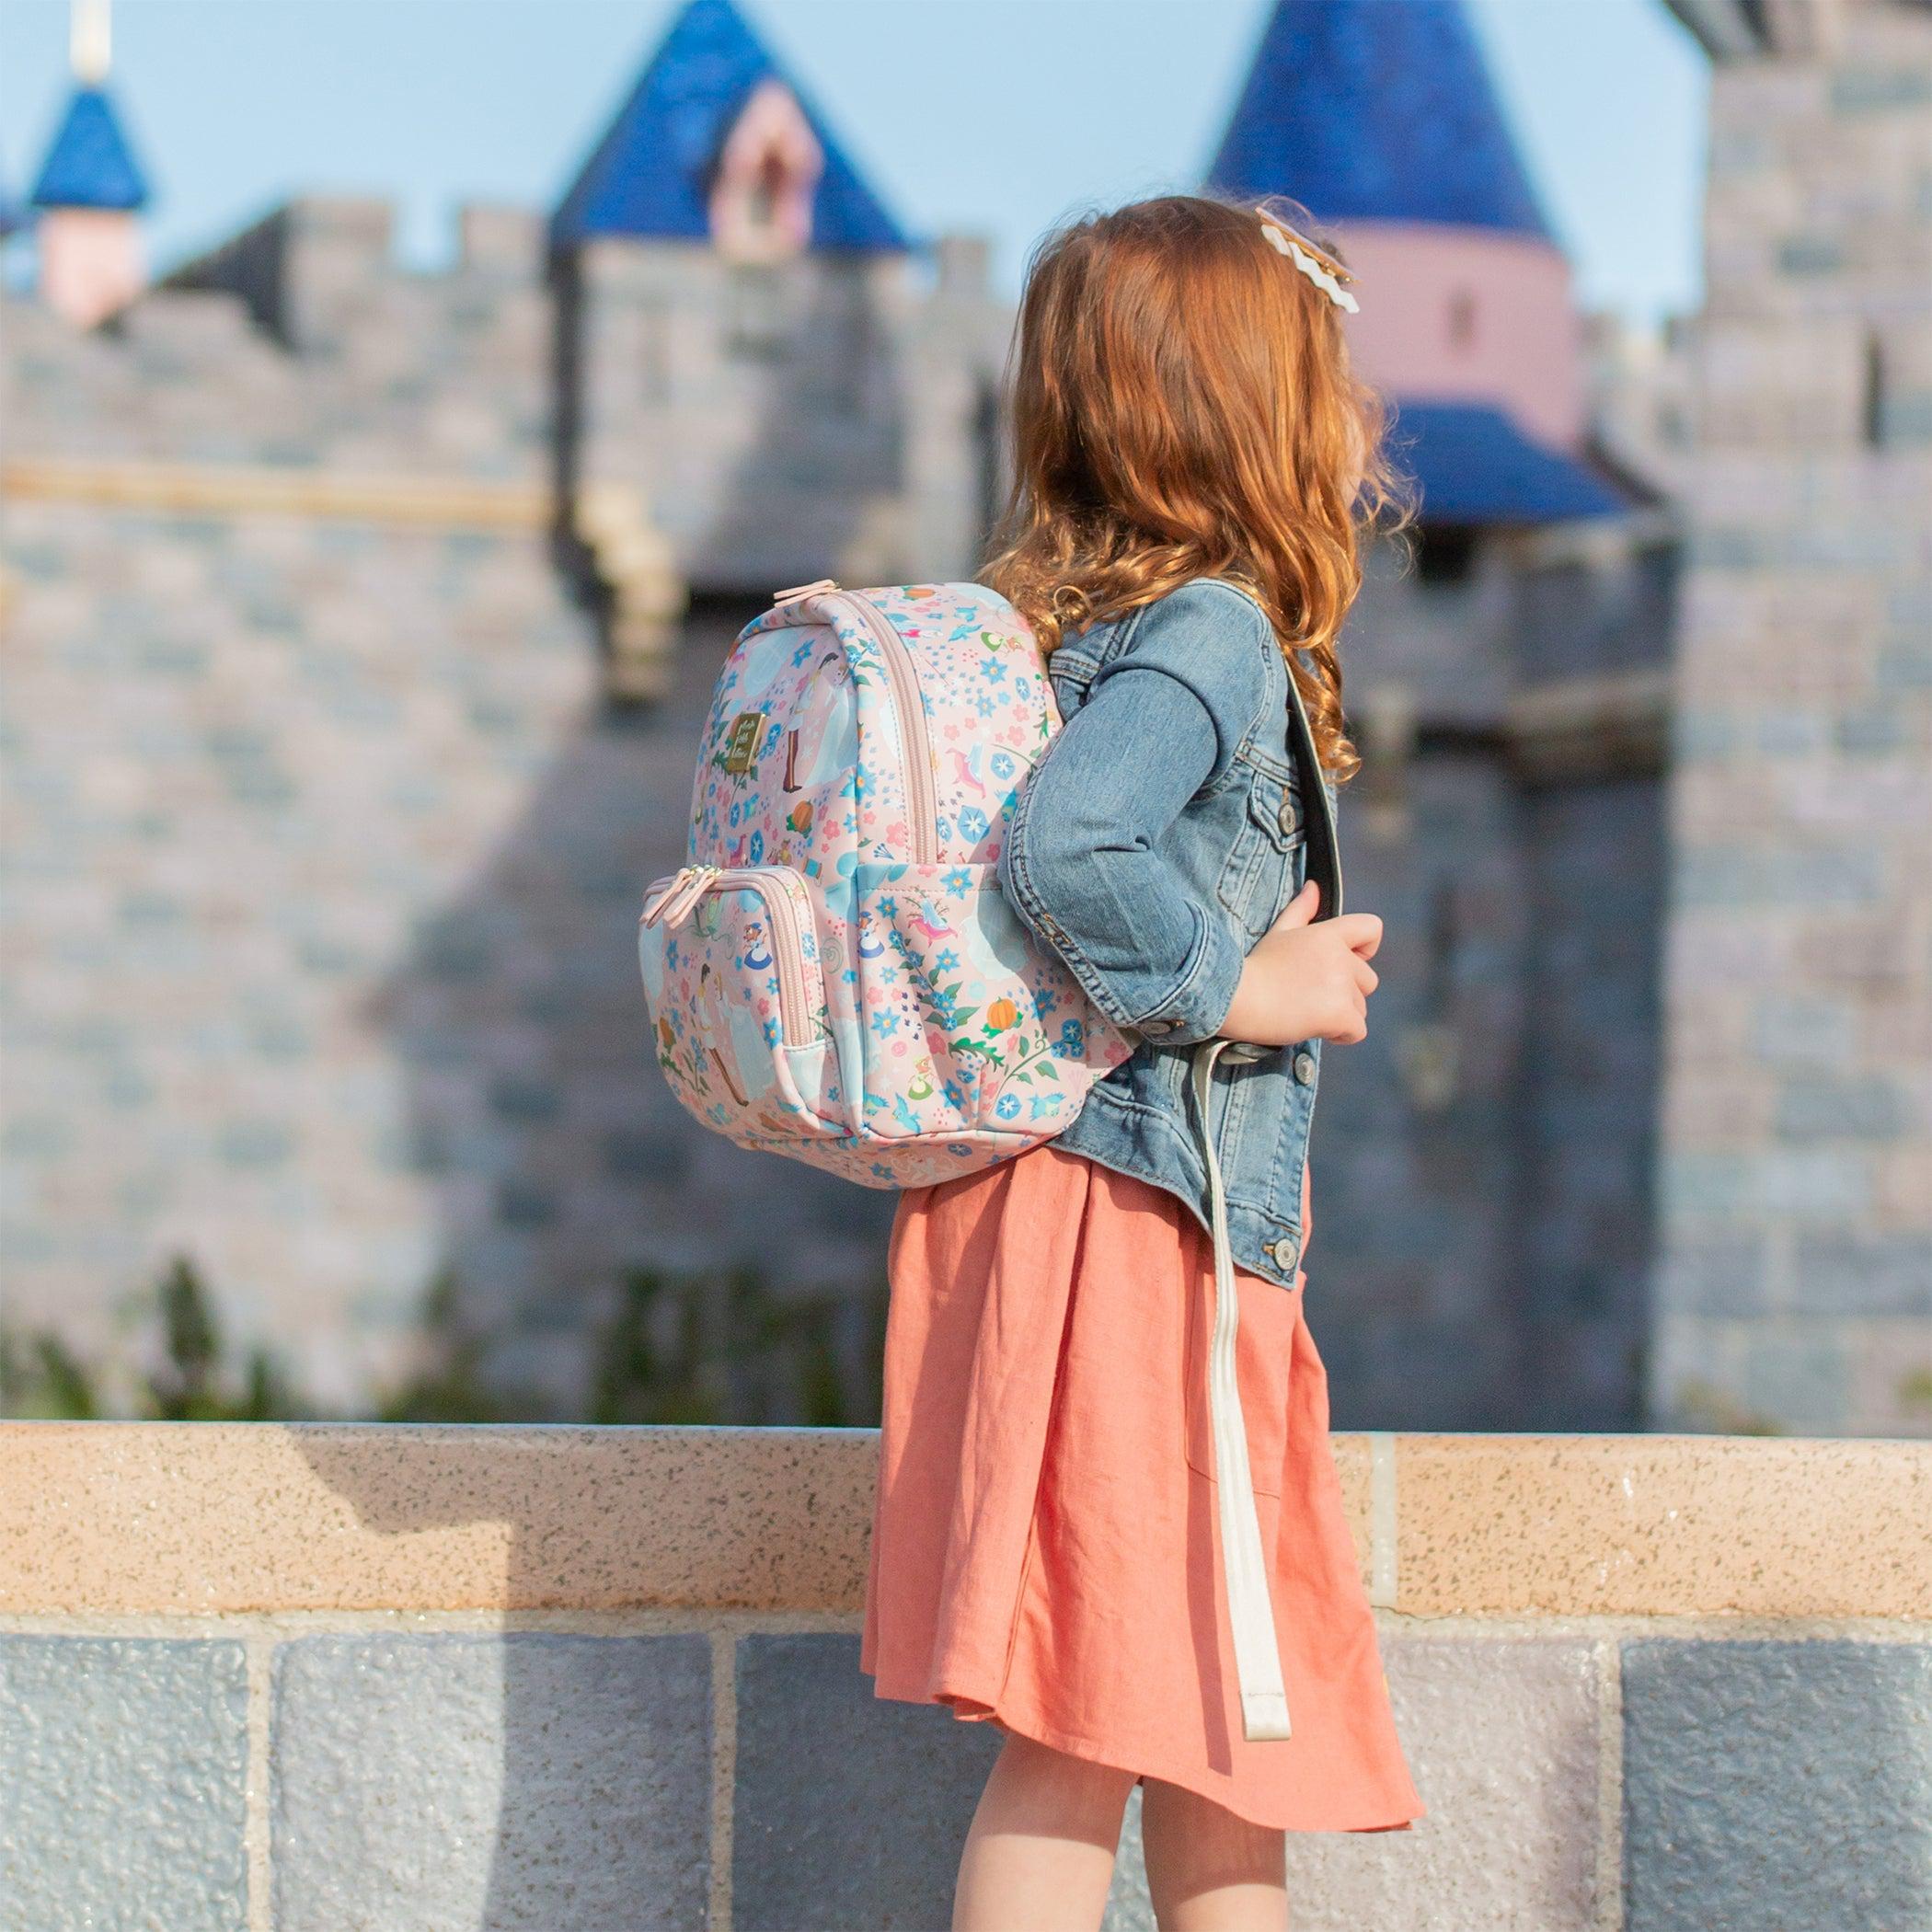 Petunia Pickle Bottom Mini Backpack in Disney's Cinderella